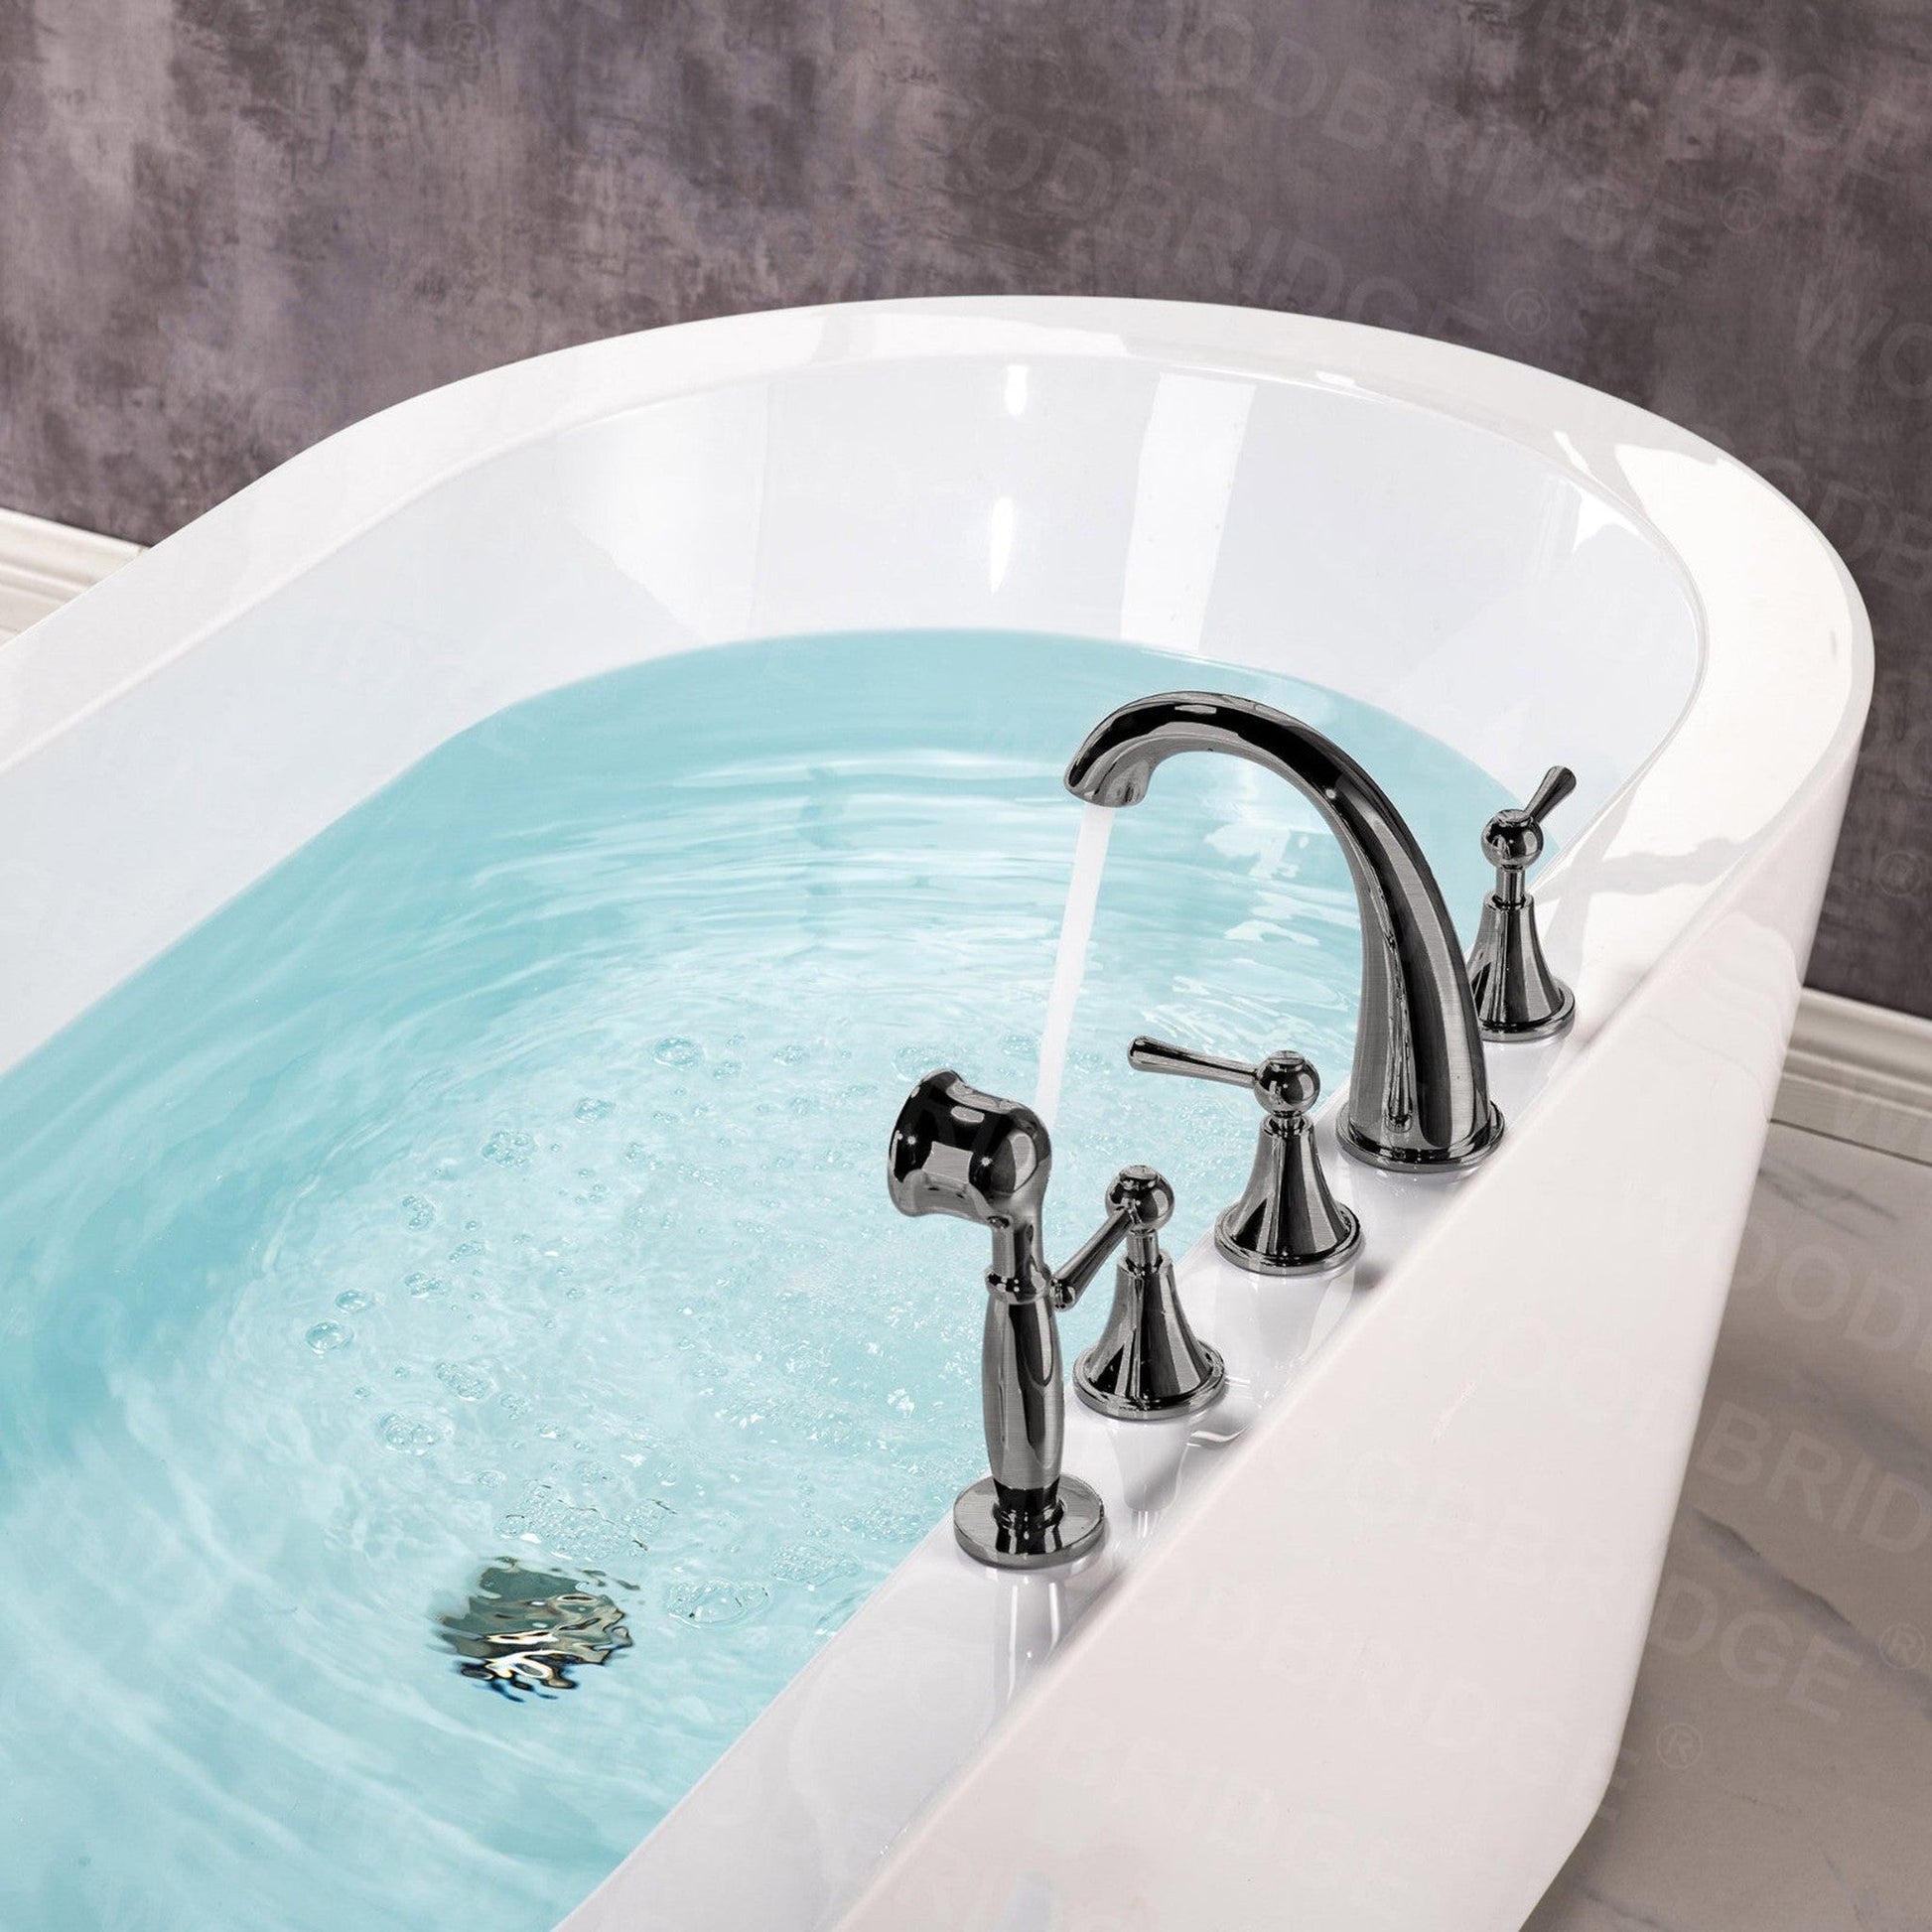 WoodBridge BTA0088 56" White Acrylic Freestanding Soaking Bathtub With Brushed Nickel Drain, Overflow, F0022 Tub Filler and Caddy Tray